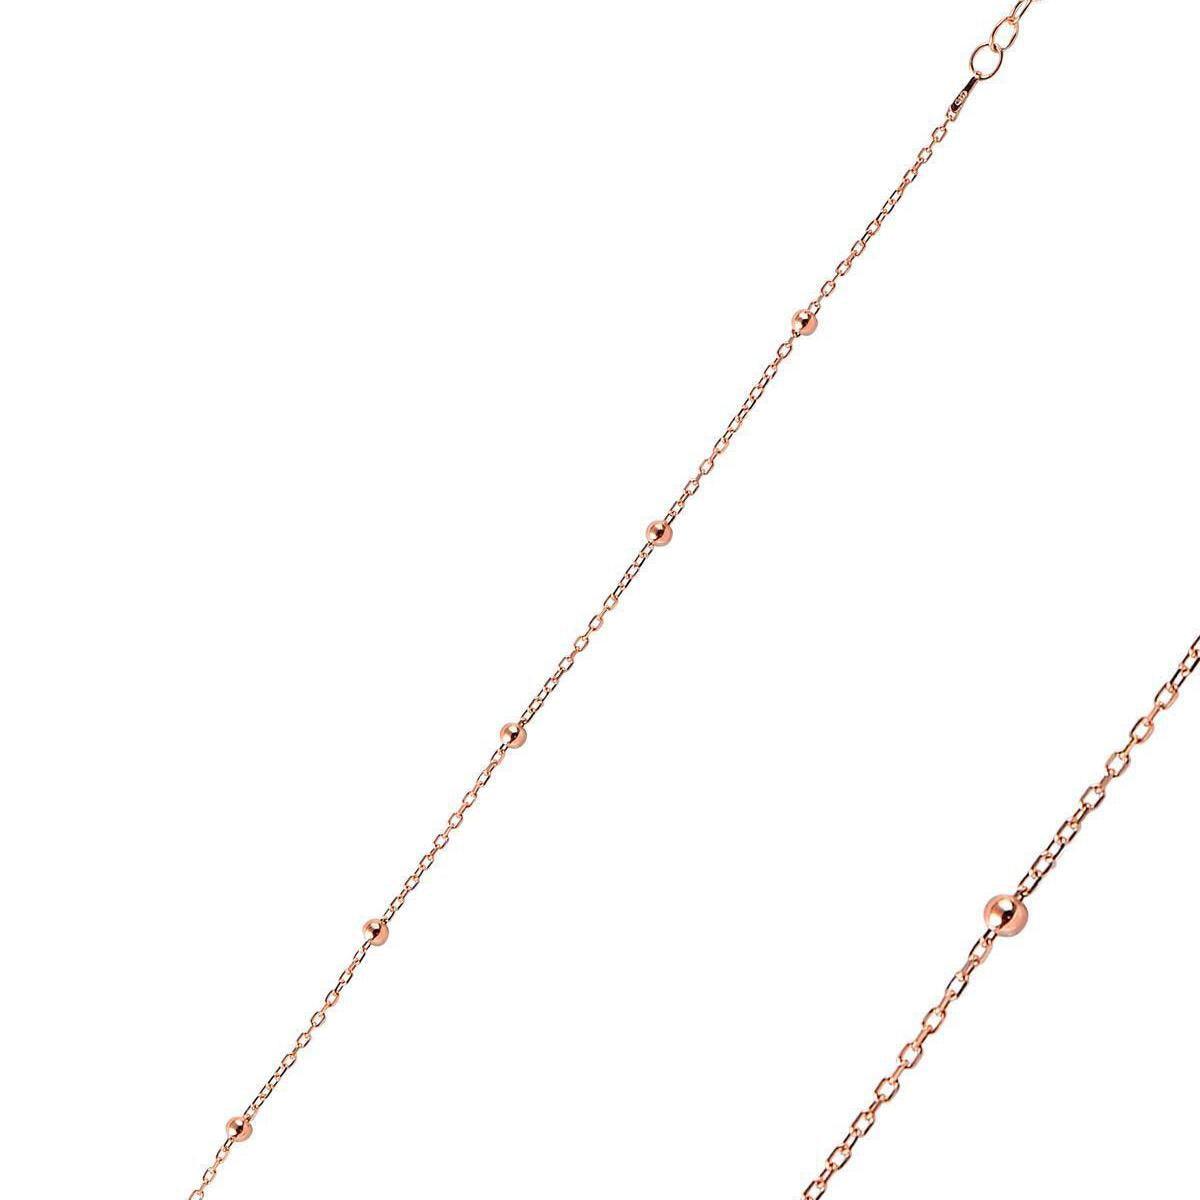 Satellite Chain Bracelet • Sterling Silver Satellite Chain Bracelet - Trending Silver Gifts